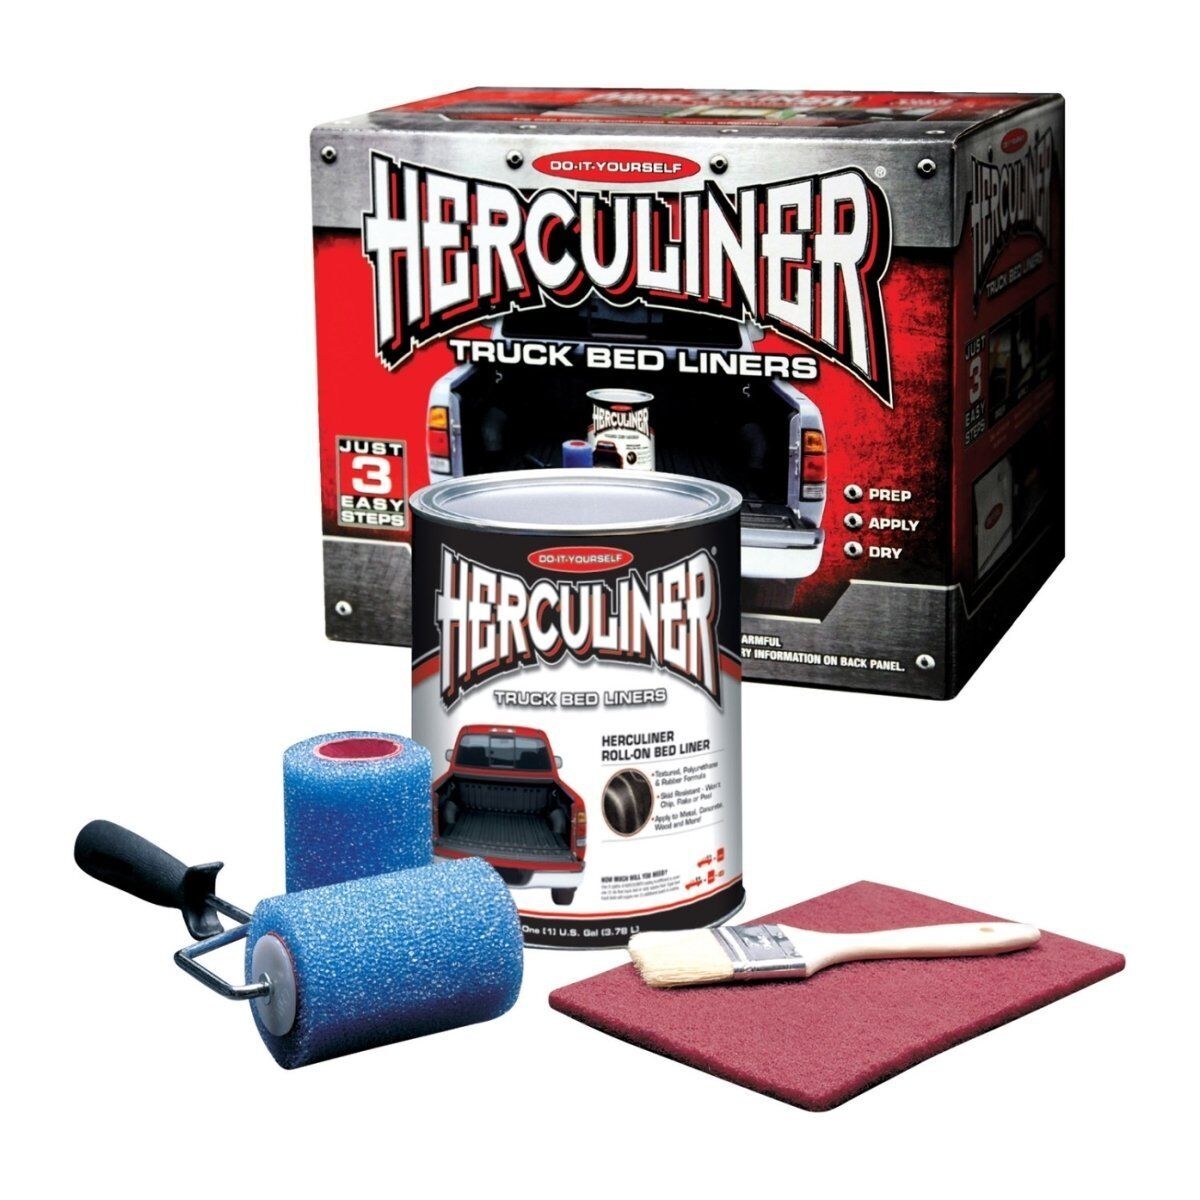 Herculiner HCL0B8 Truck Bed Liner Kit For Pick-Up Truck Beds, Black